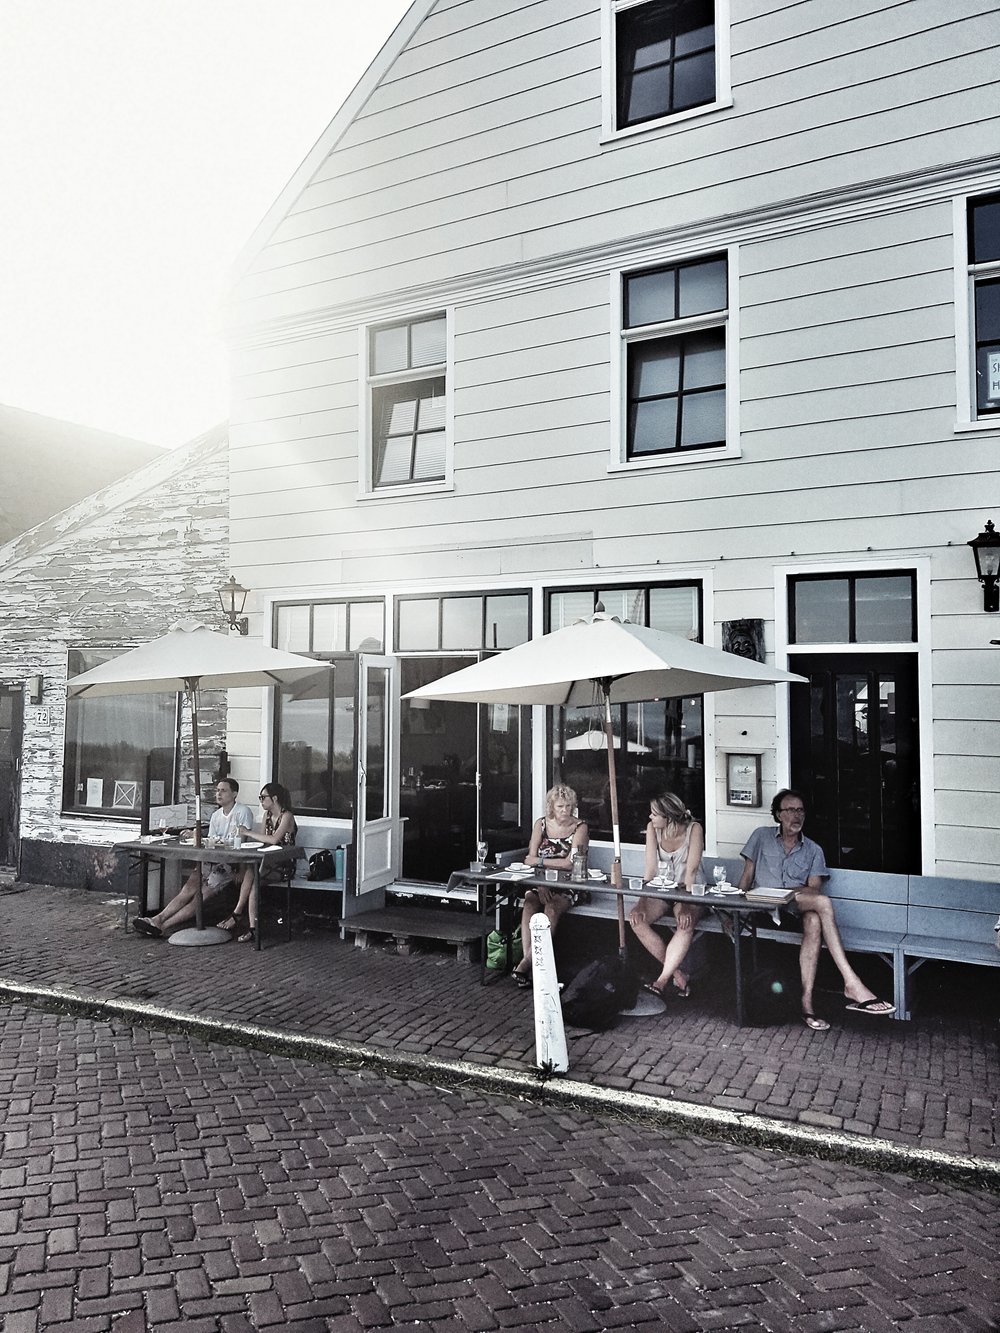  The local bar and restaurant in Durgerdam 